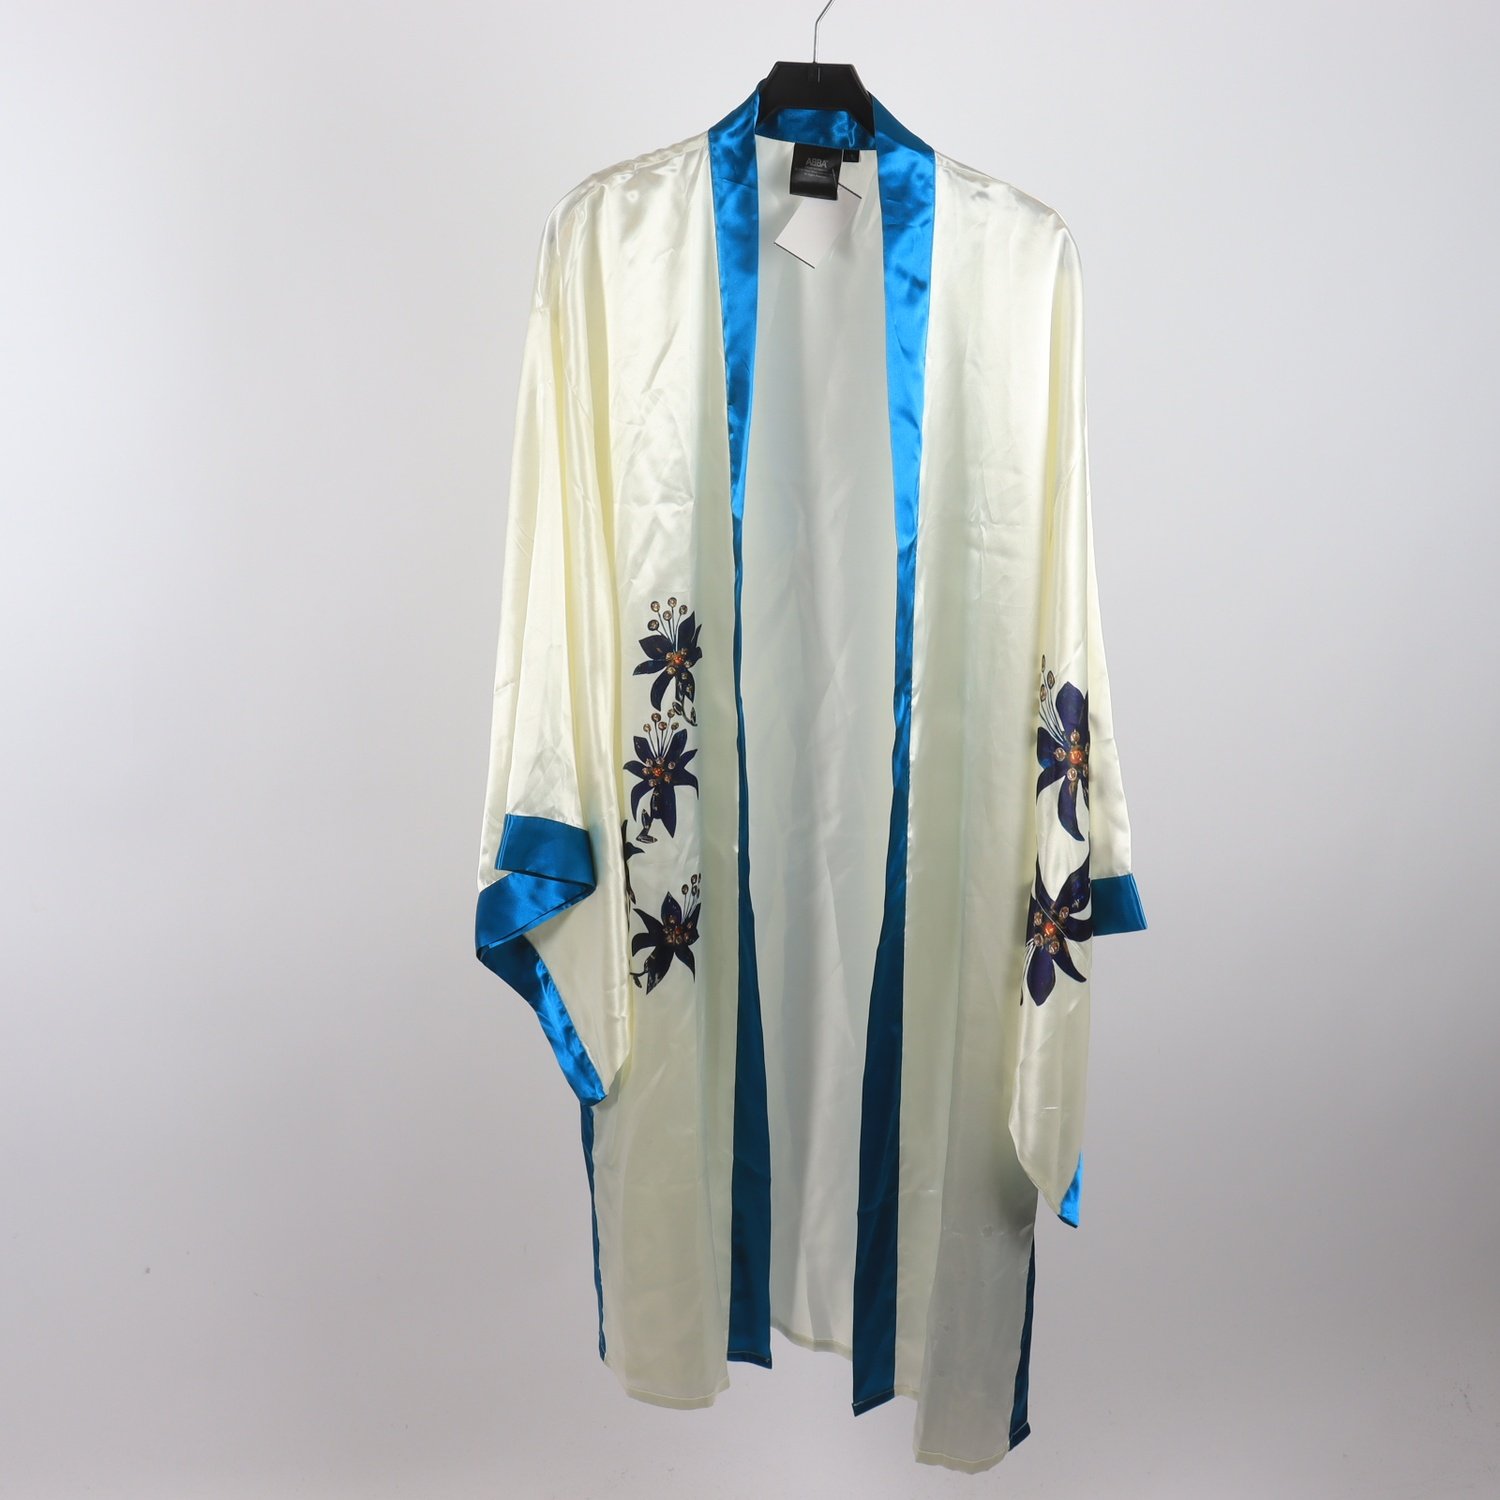 Kimono, ABBA, Polar Music International, mönstrad, stl. L/XL